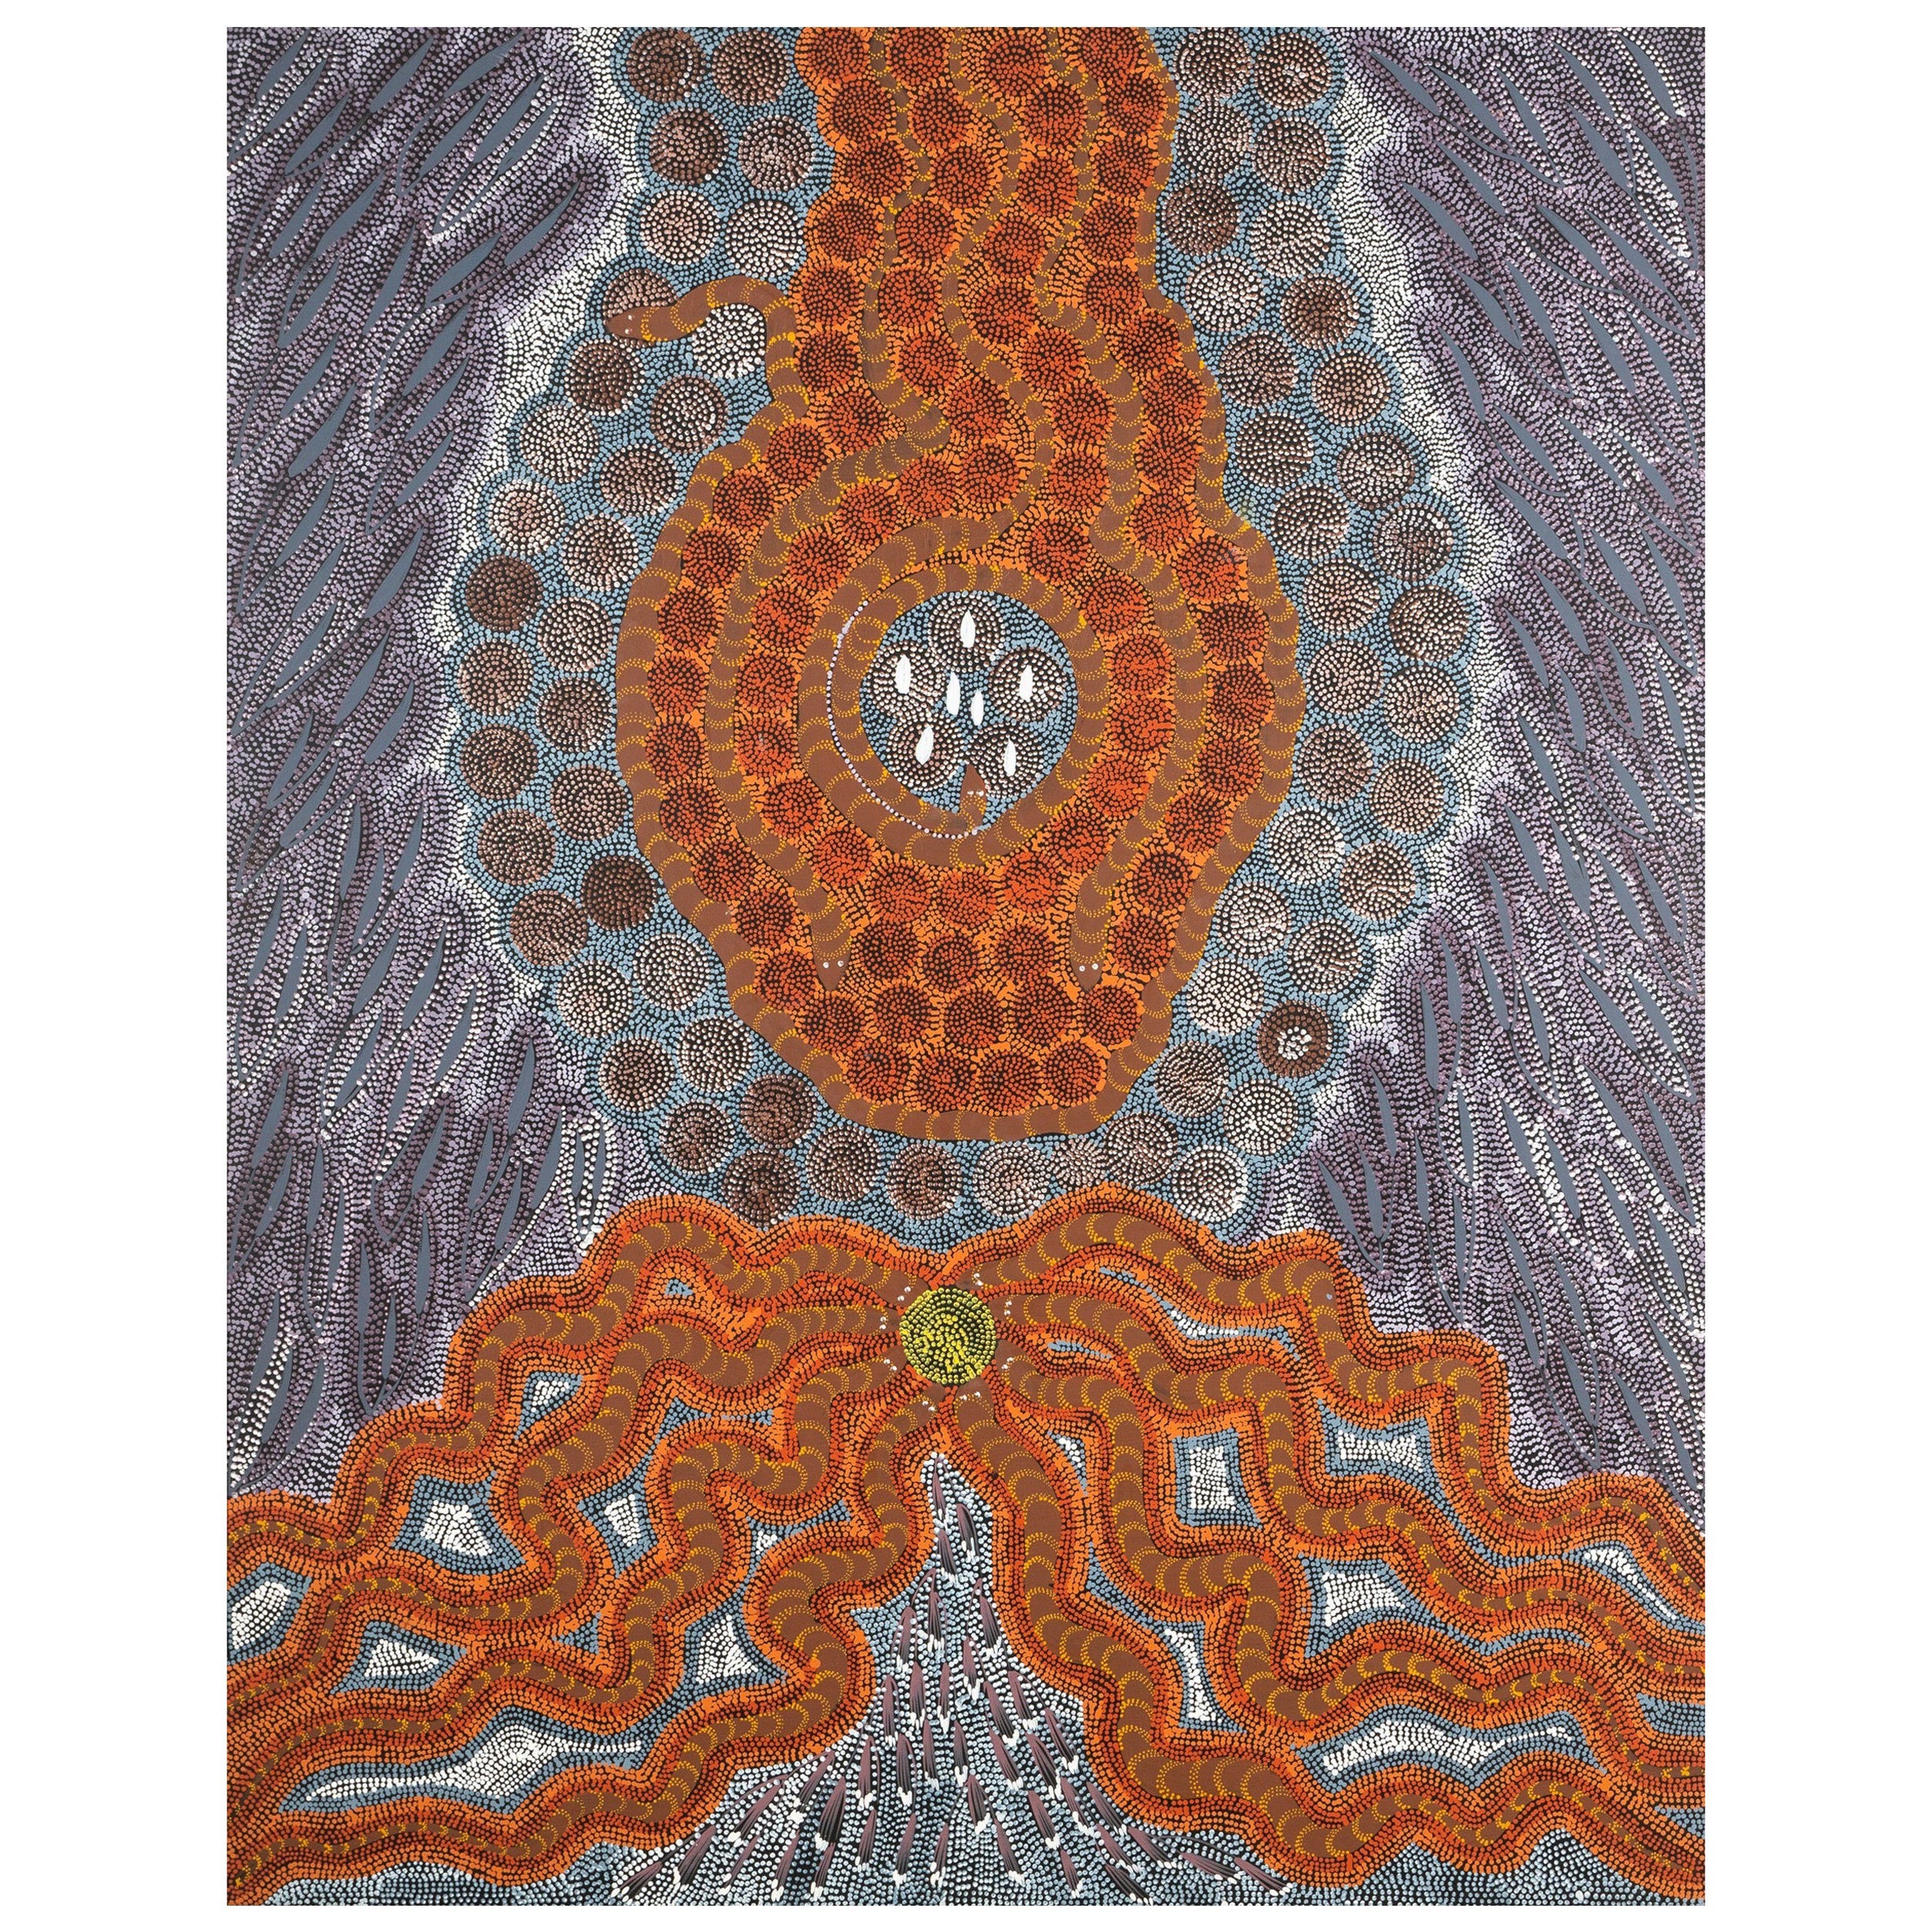 Art aborigène australien Janet Forrester Ngala peint un serpent et un rêve de Milky Way